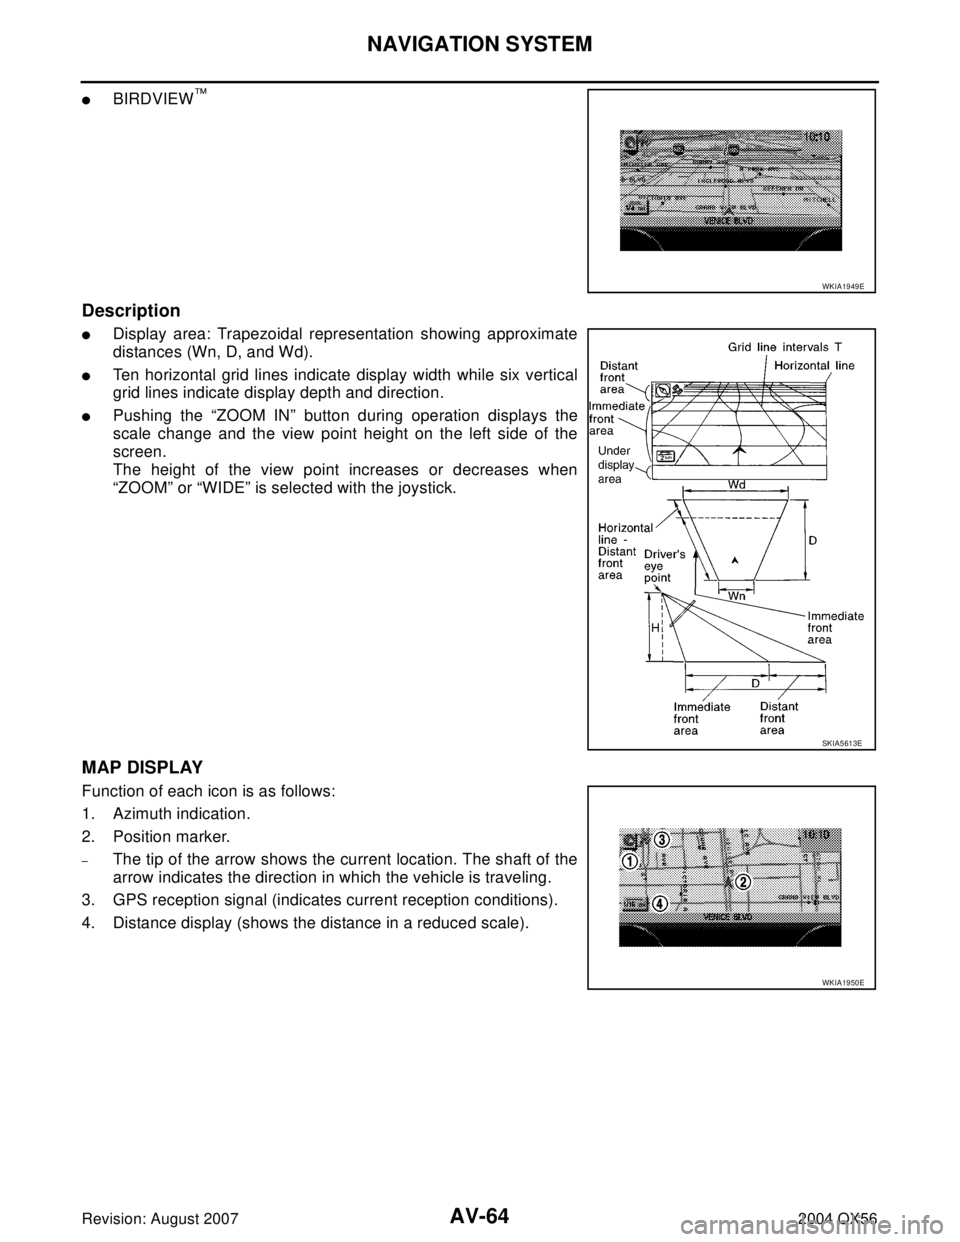 INFINITI QX56 2004  Factory Service Manual AV-64
NAVIGATION SYSTEM
Revision: August 20072004 QX56
BIRDVIEW™
Description
Display area: Trapezoidal representation showing approximate
distances (Wn, D, and Wd).
Ten horizontal grid lines indi